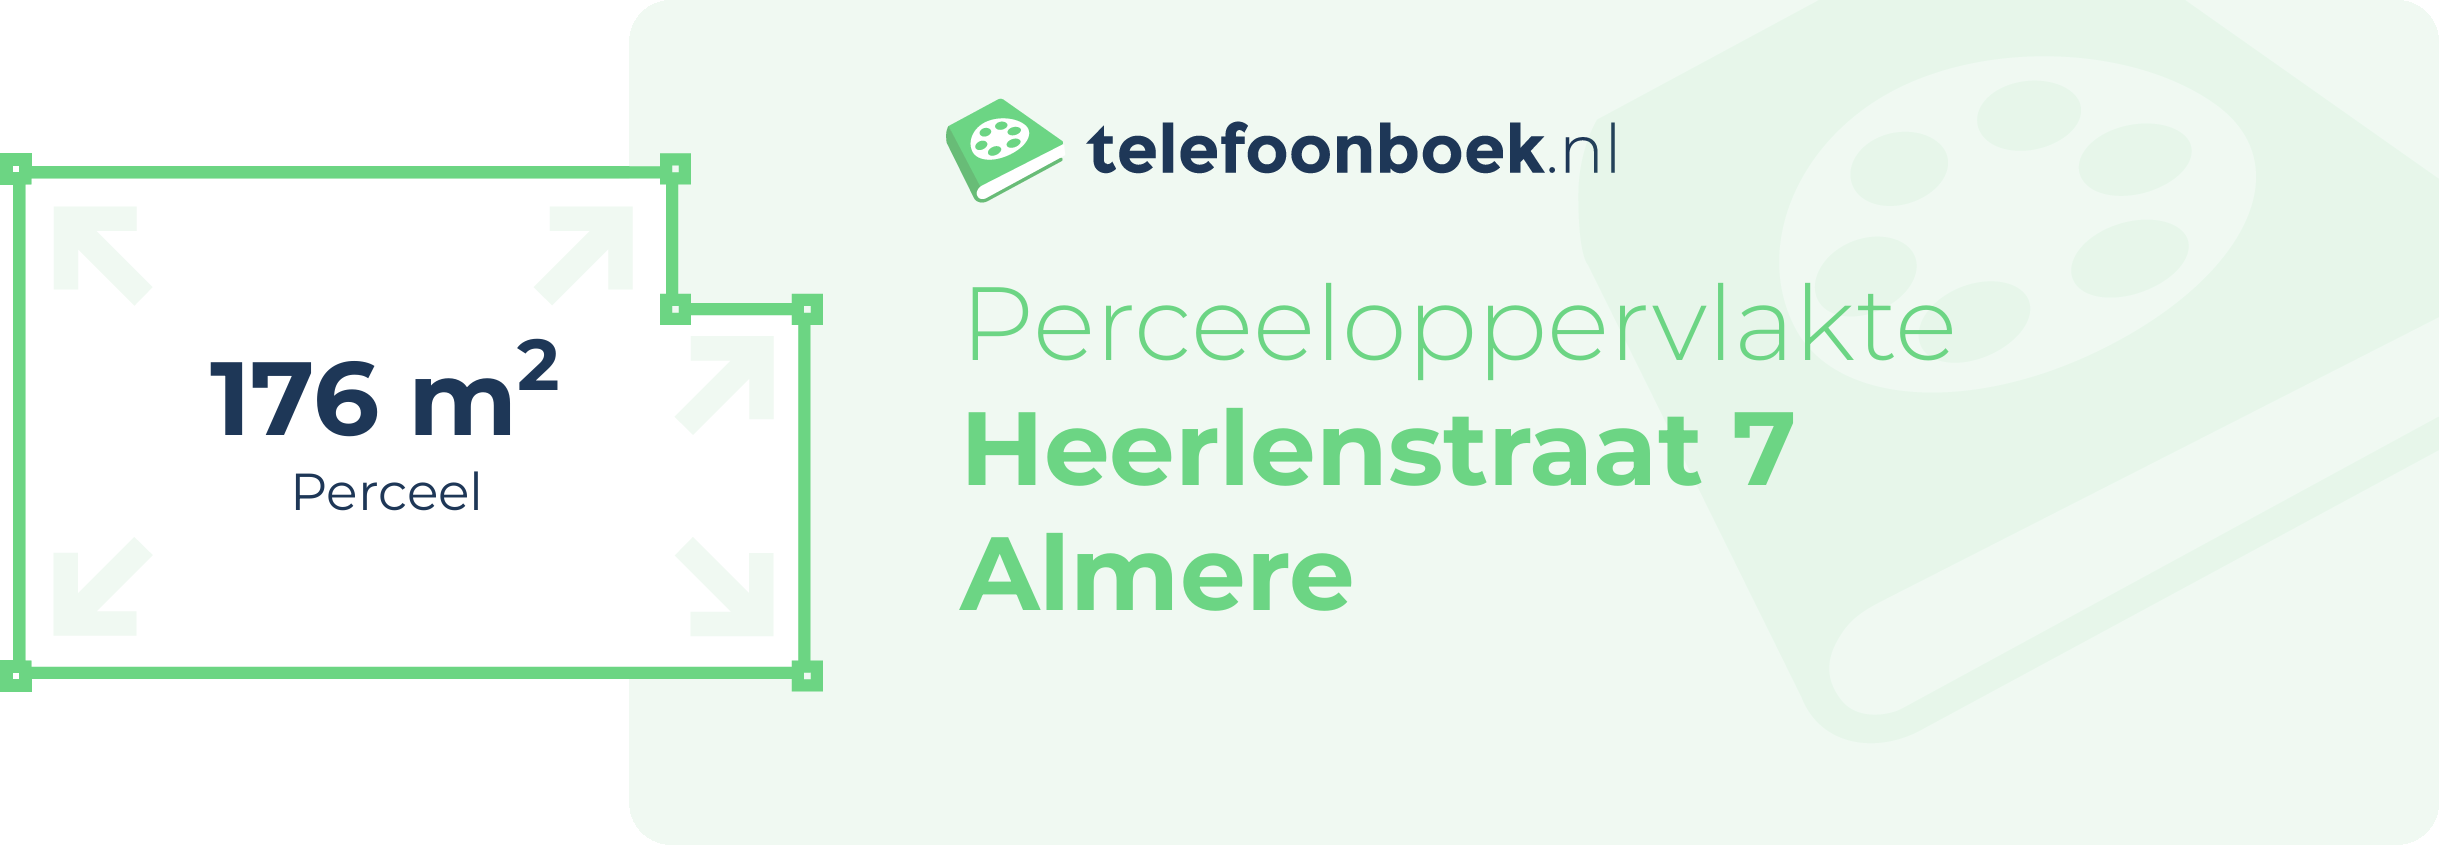 Perceeloppervlakte Heerlenstraat 7 Almere